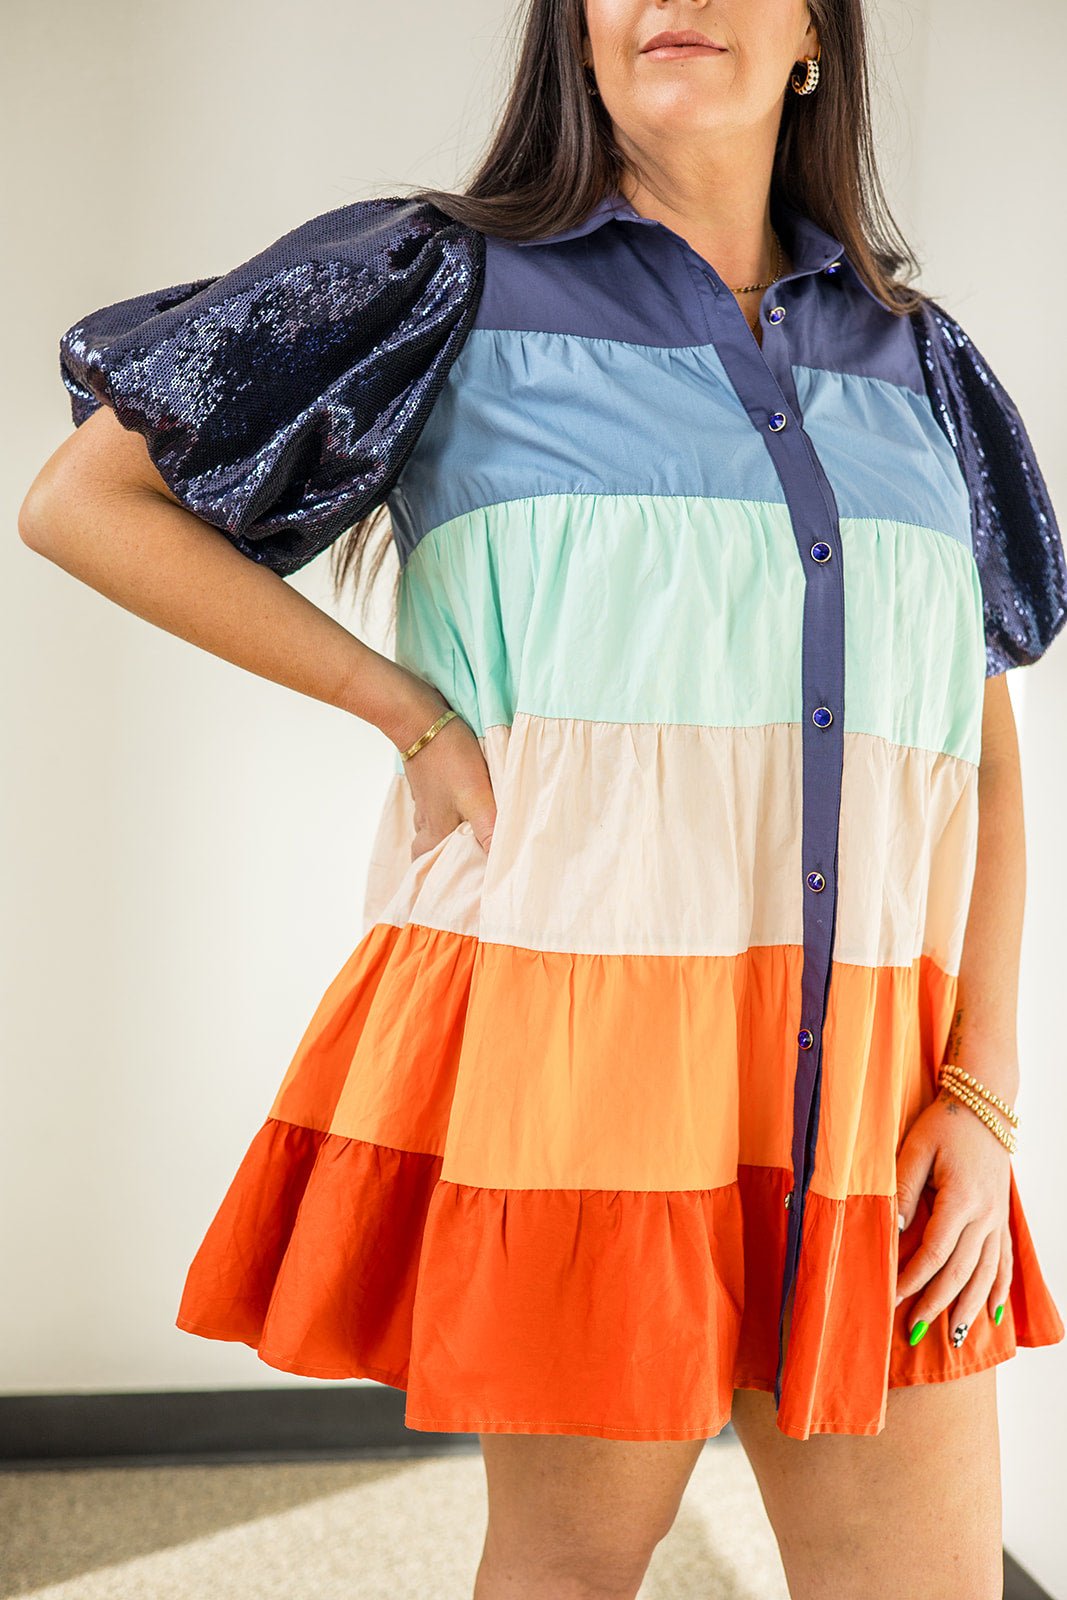 Teal Rainbow Sequin Stripe Dress Short Sleeve – Queen of Sparkles